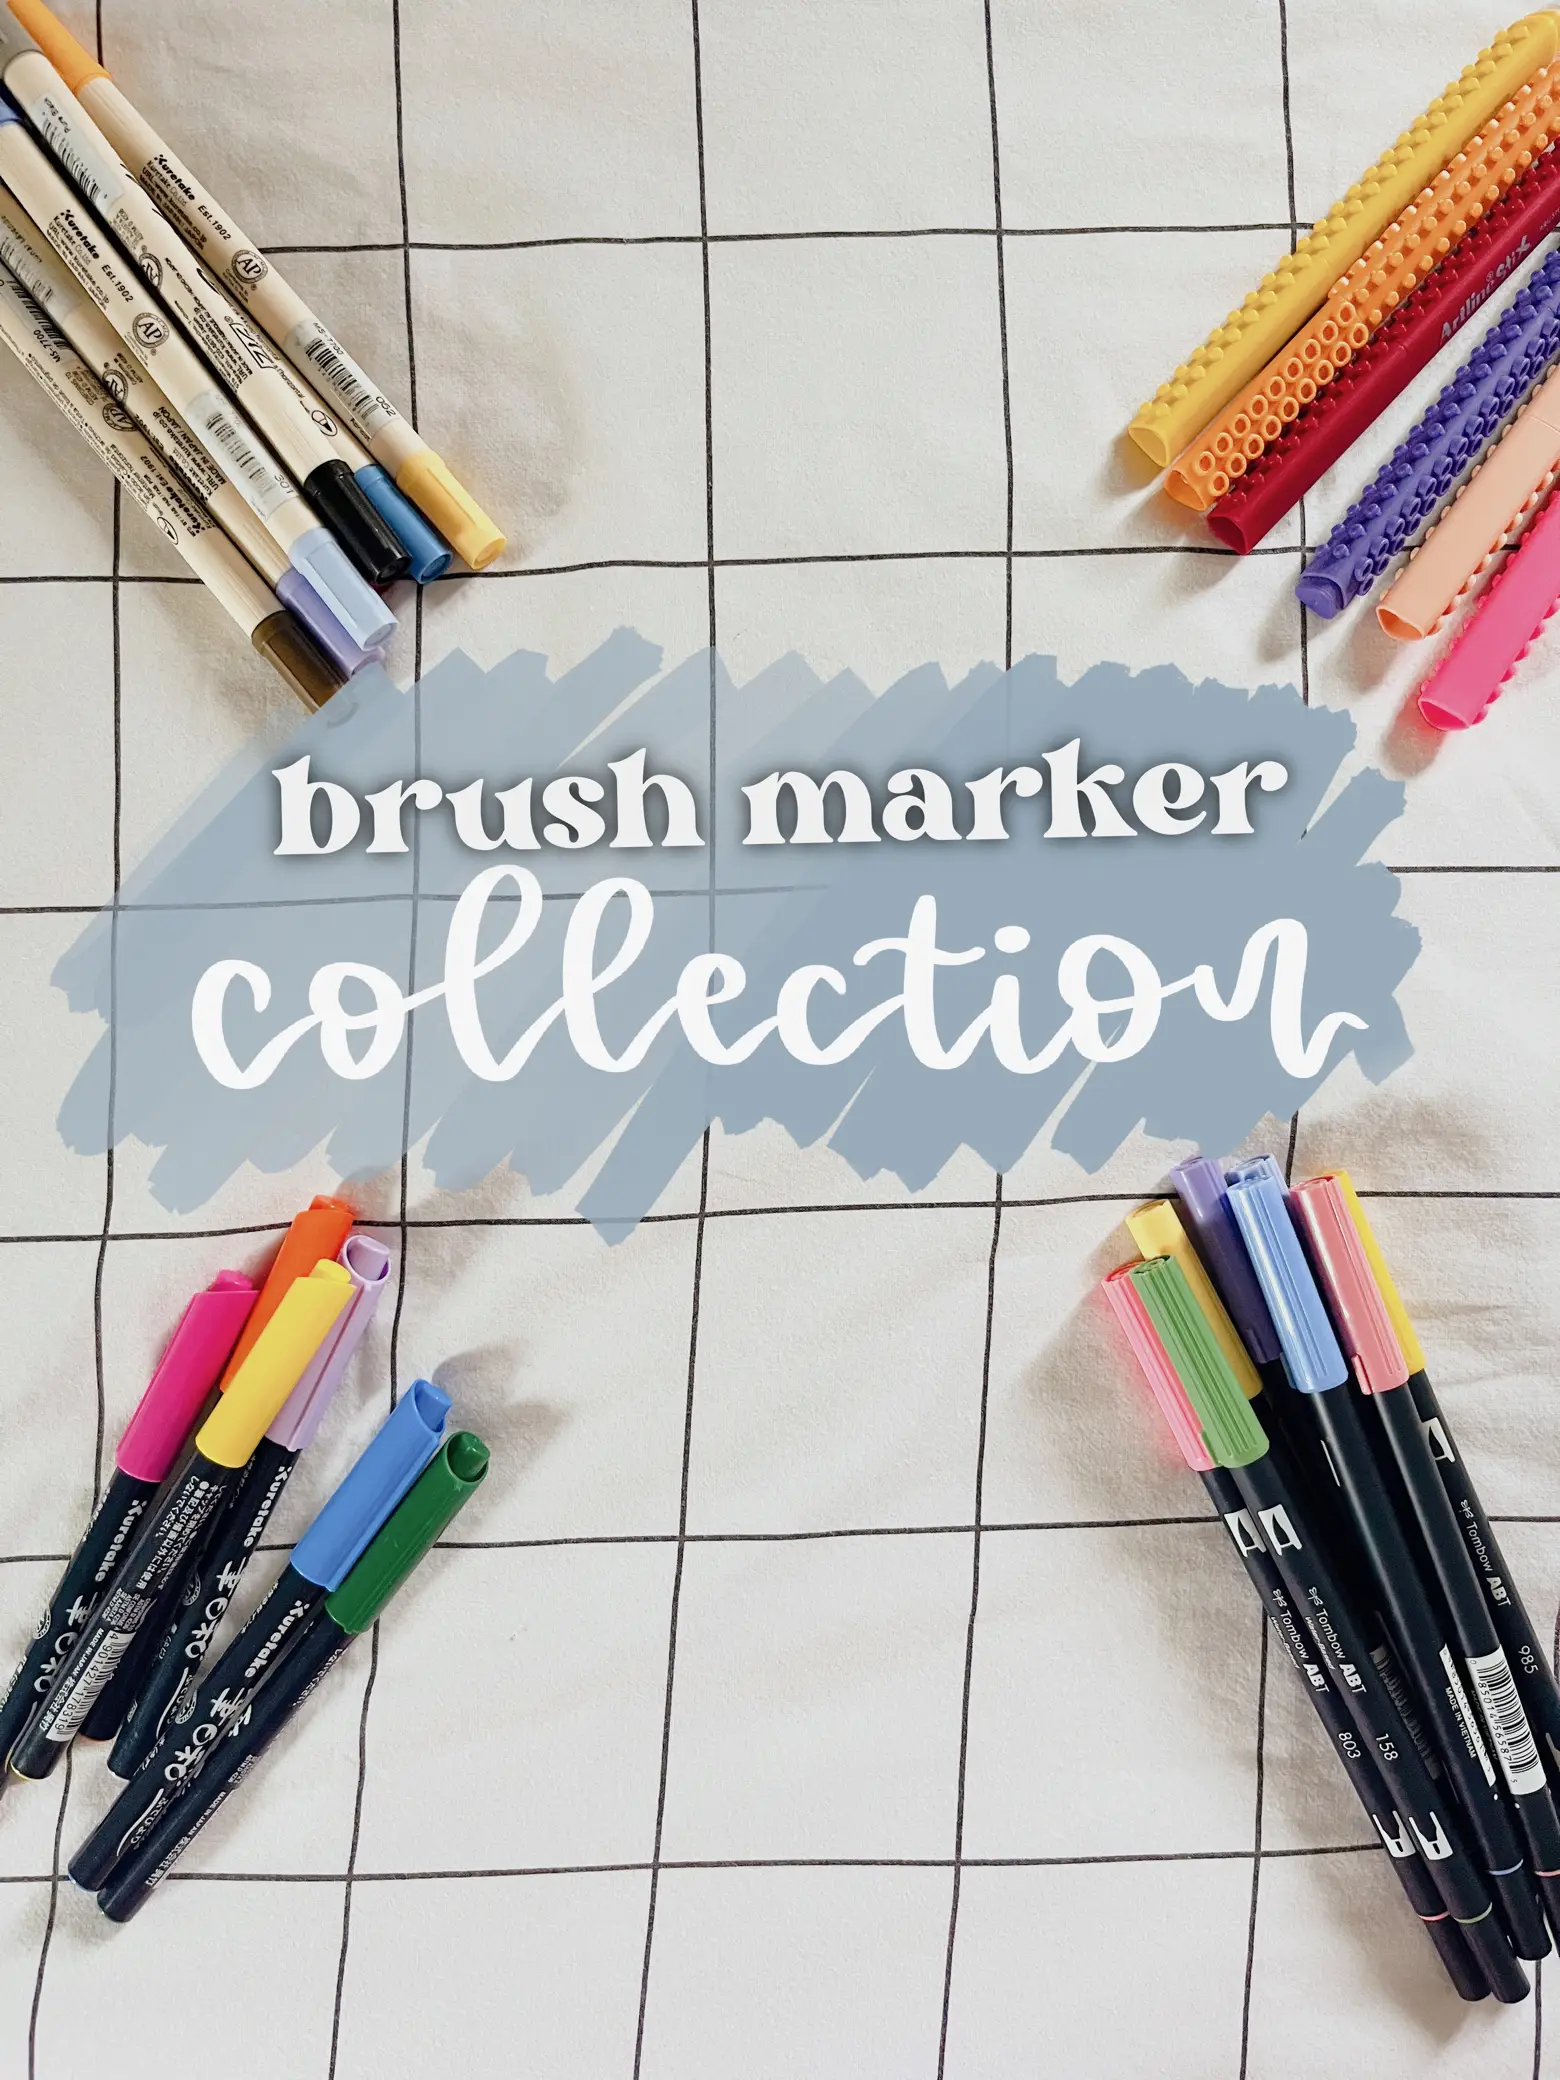 Ohuhu Watercolor Water-Based 36 Colors Markers/Pen Set – OMG Japan